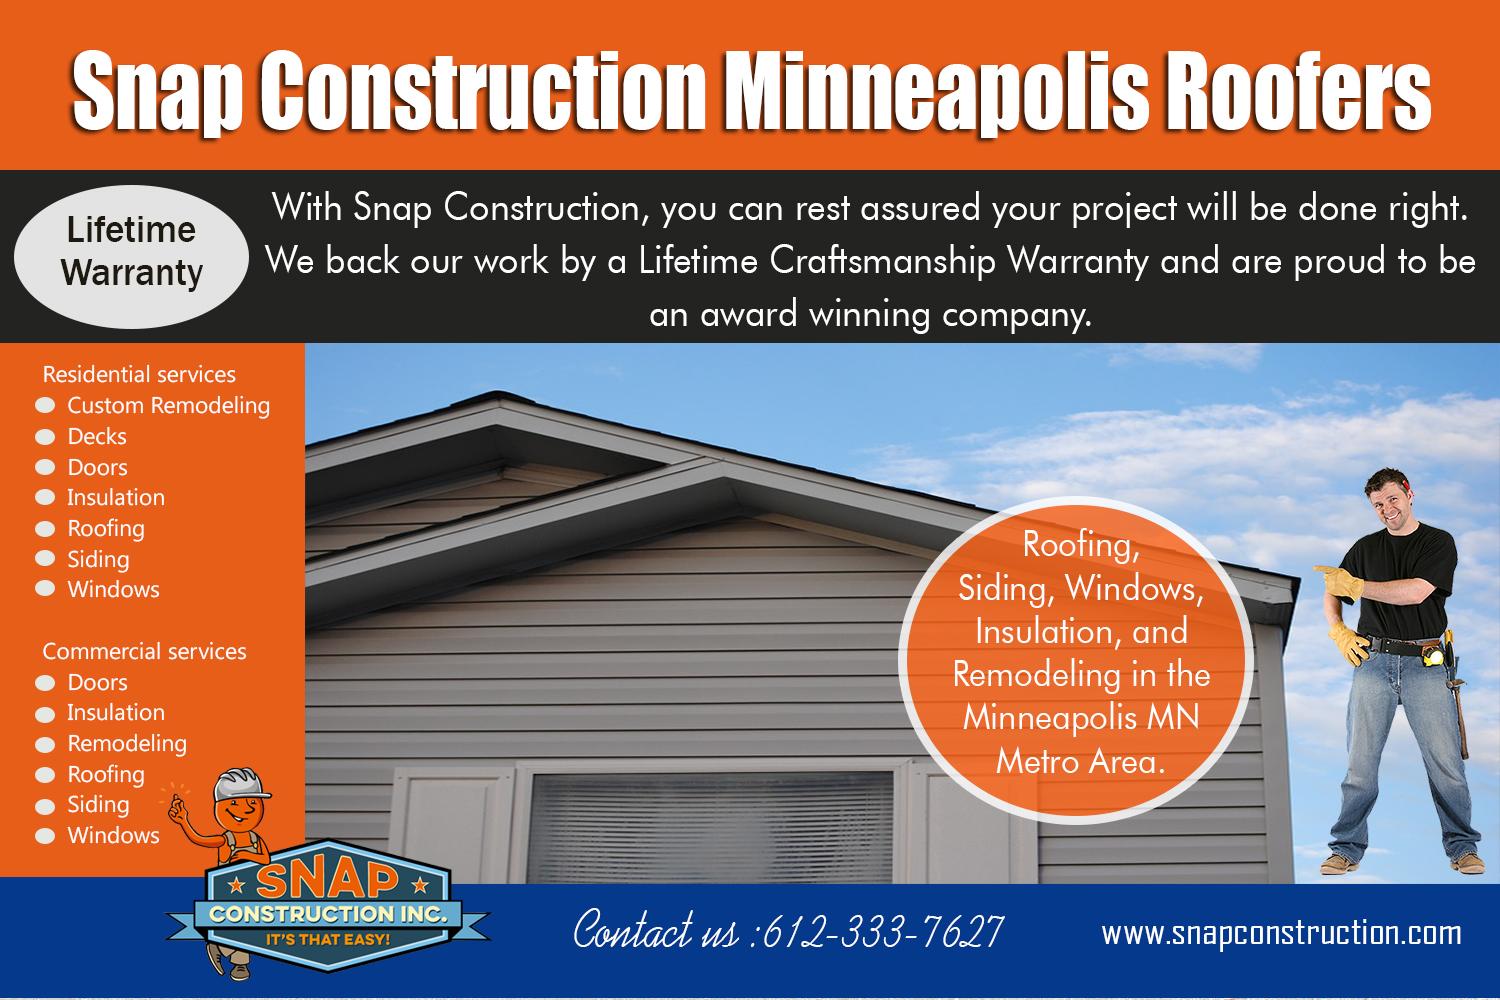 Snap Construction Minneapolis roofers